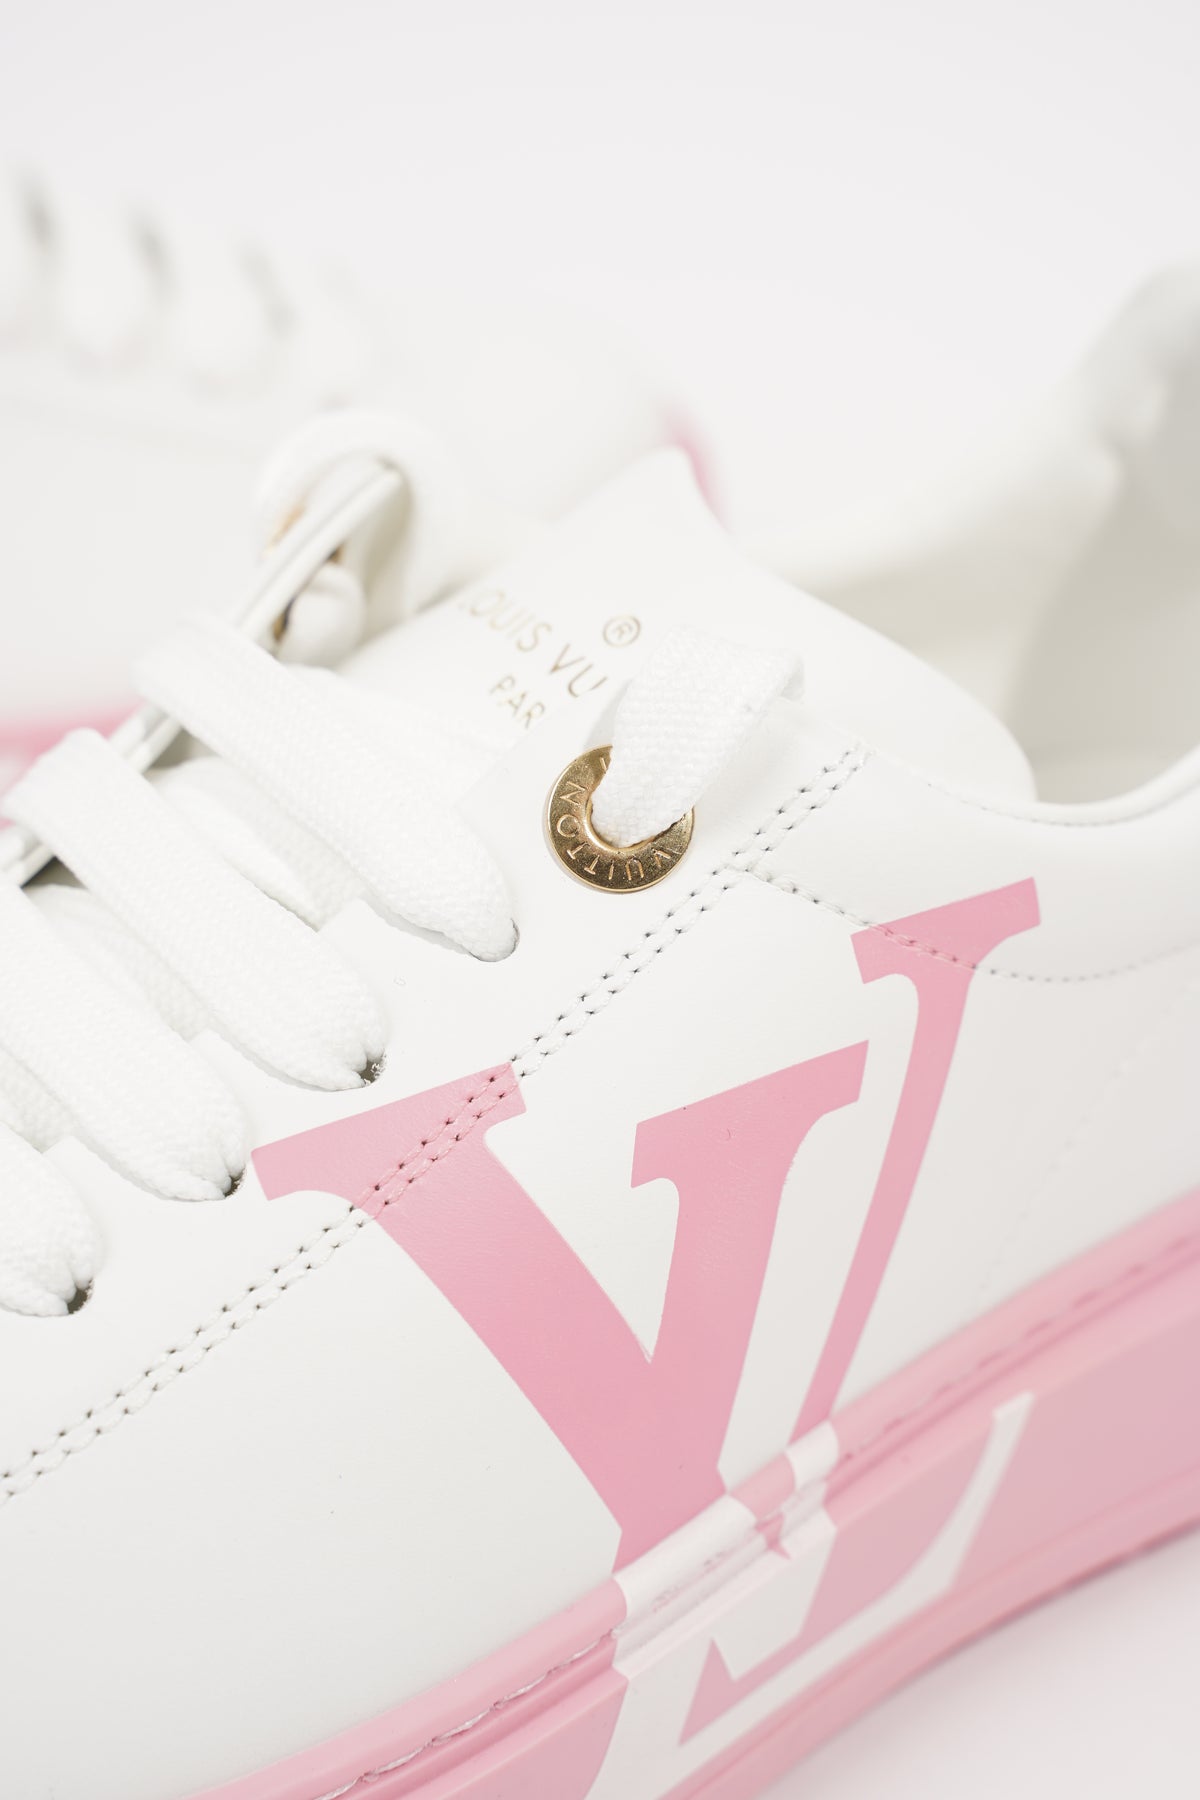 Louis Vuitton Time Out Sneaker White. Size 34.0